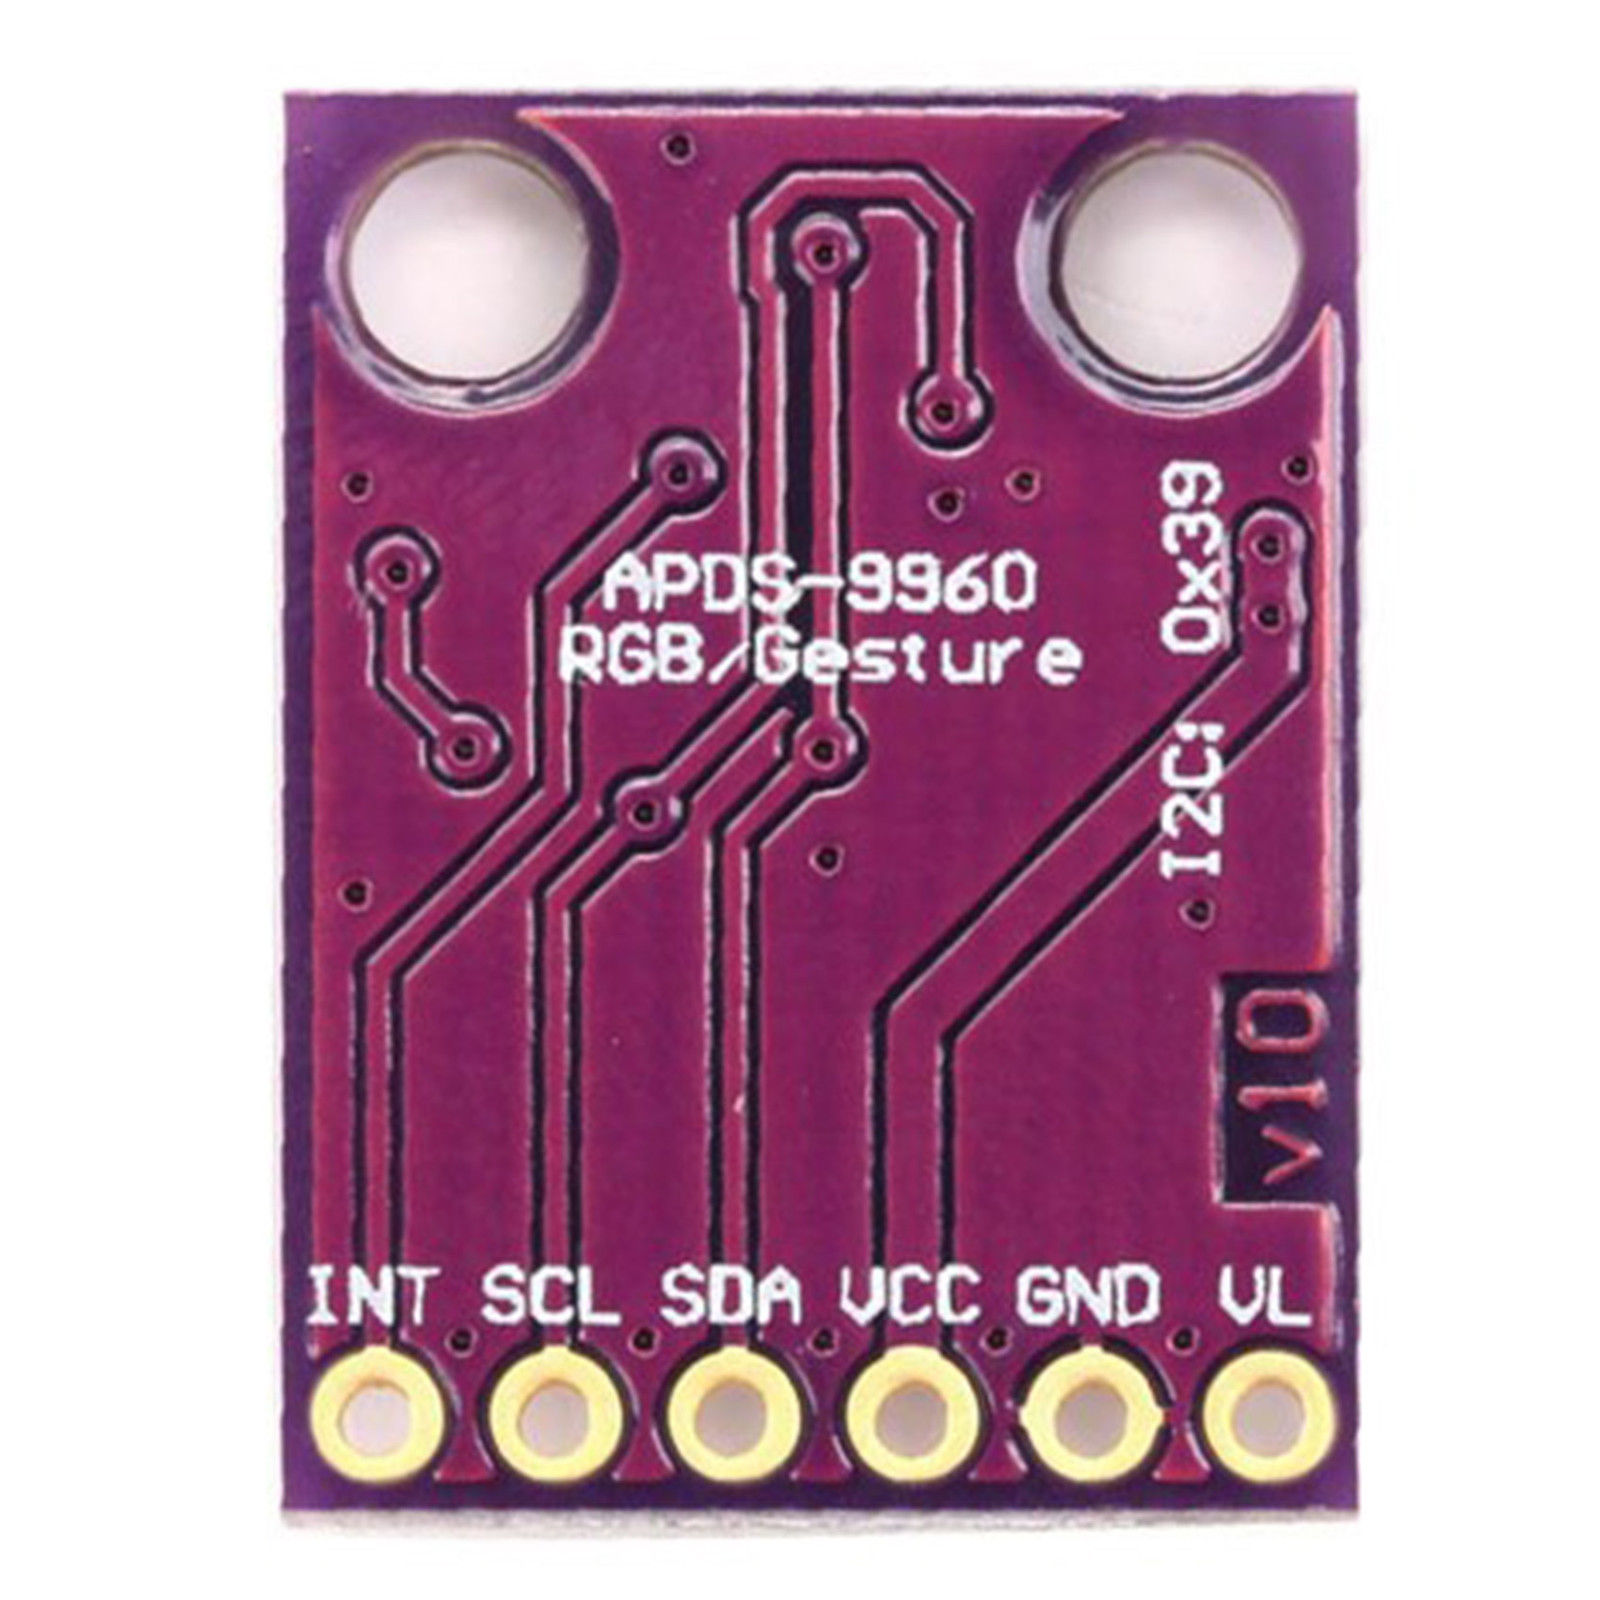 APDS-9960 GY-9960 I2C Gesture Detection Proximity RGB Sensor Breakout Module UK